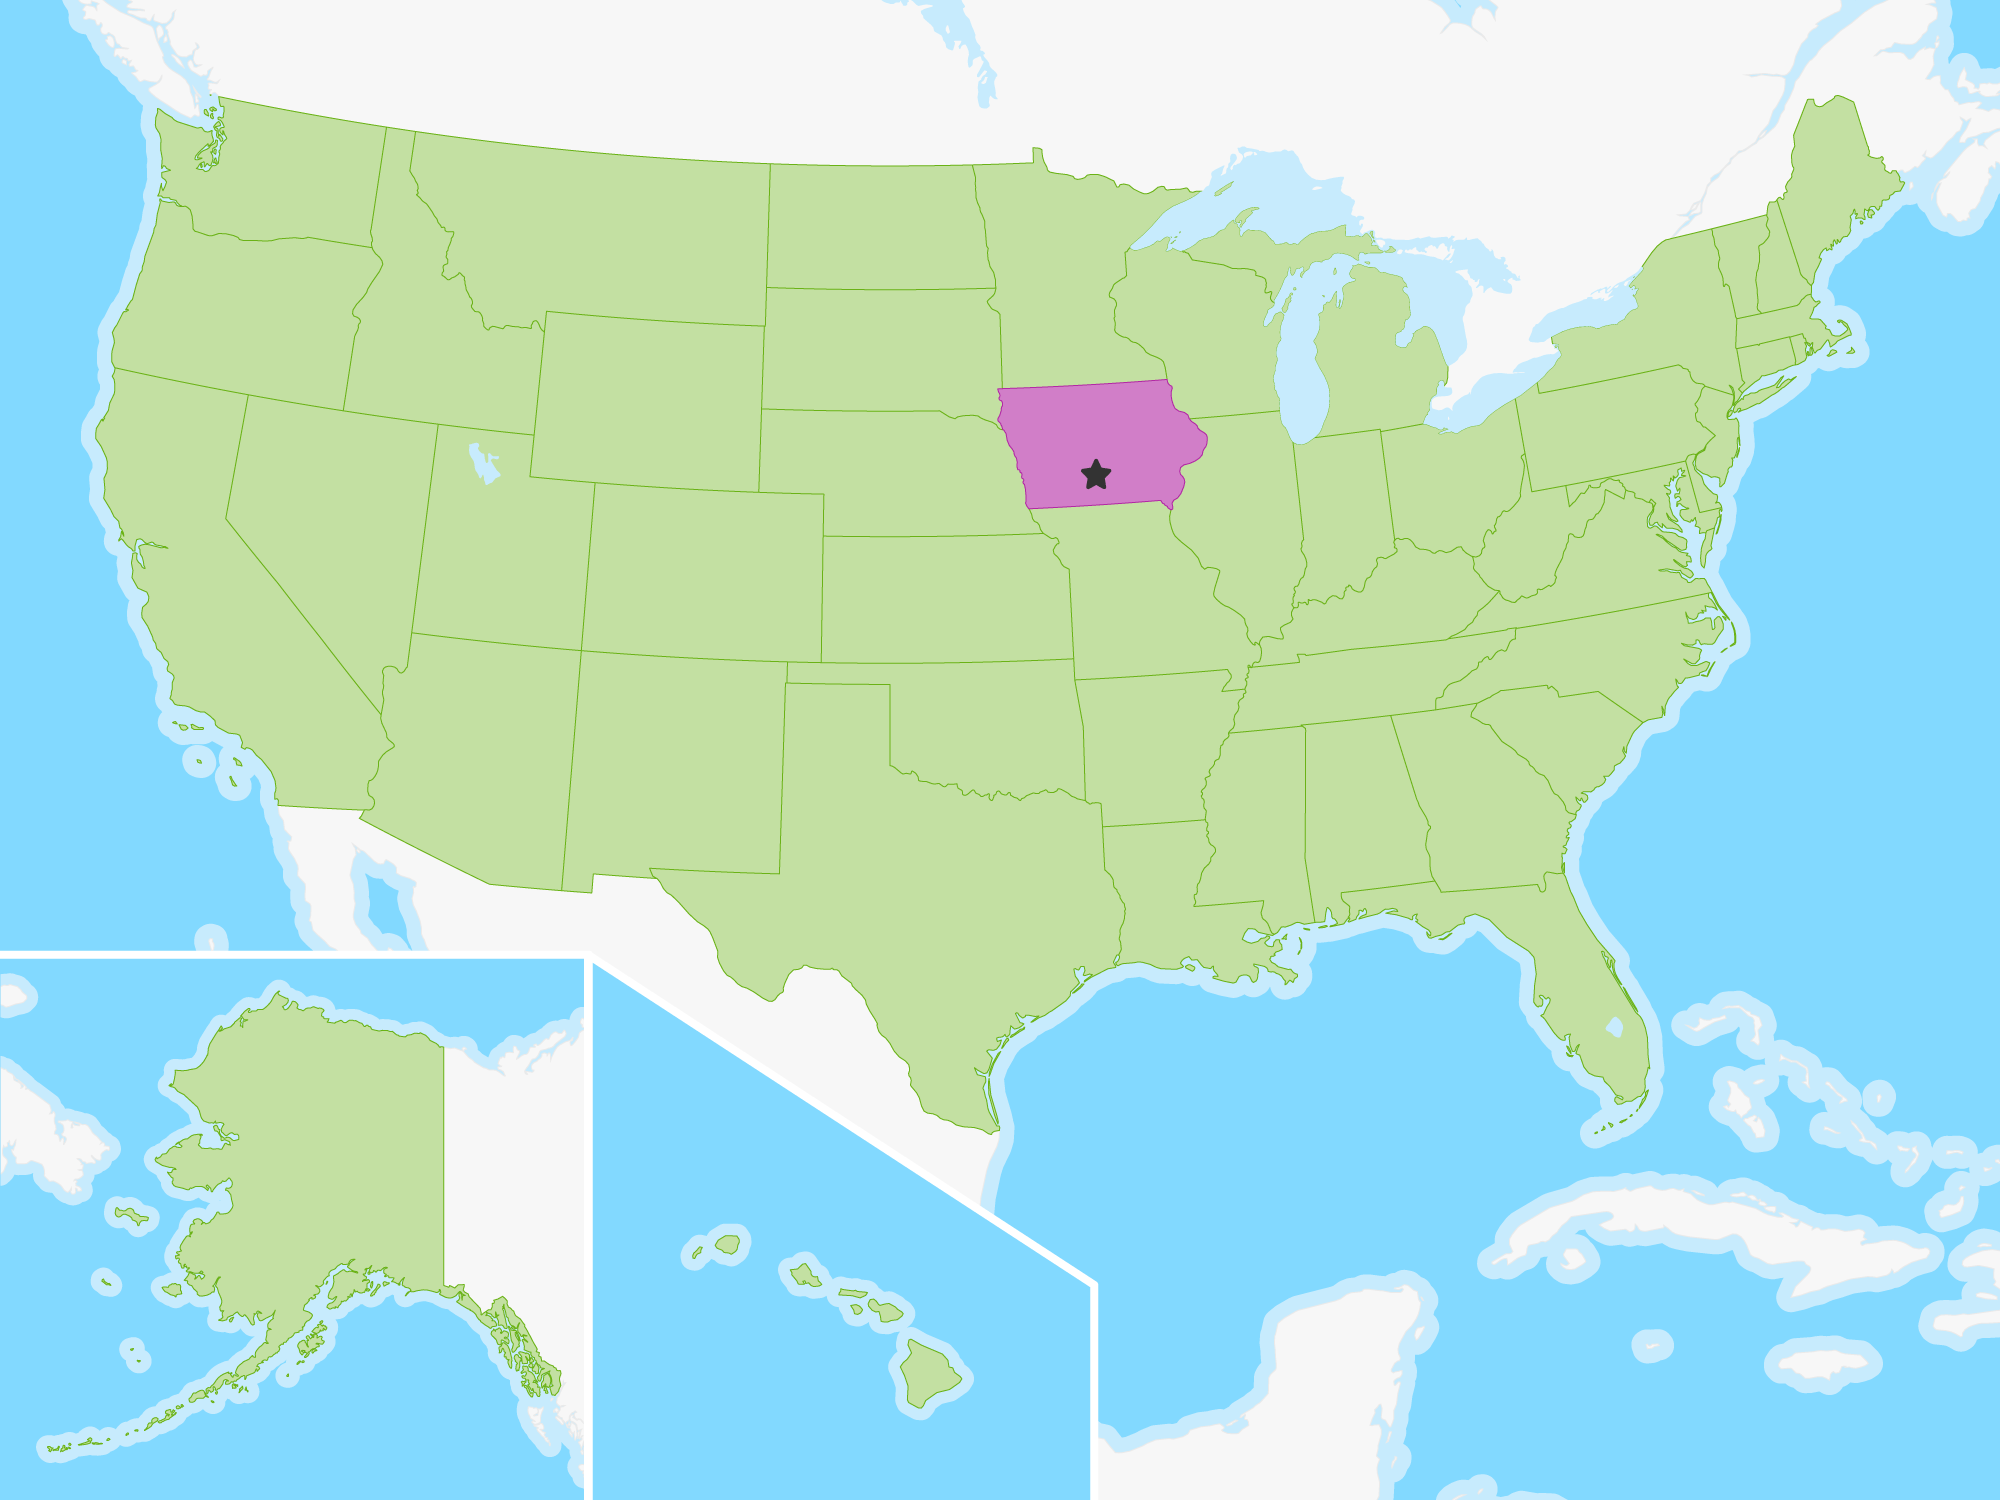 Map of Iowa